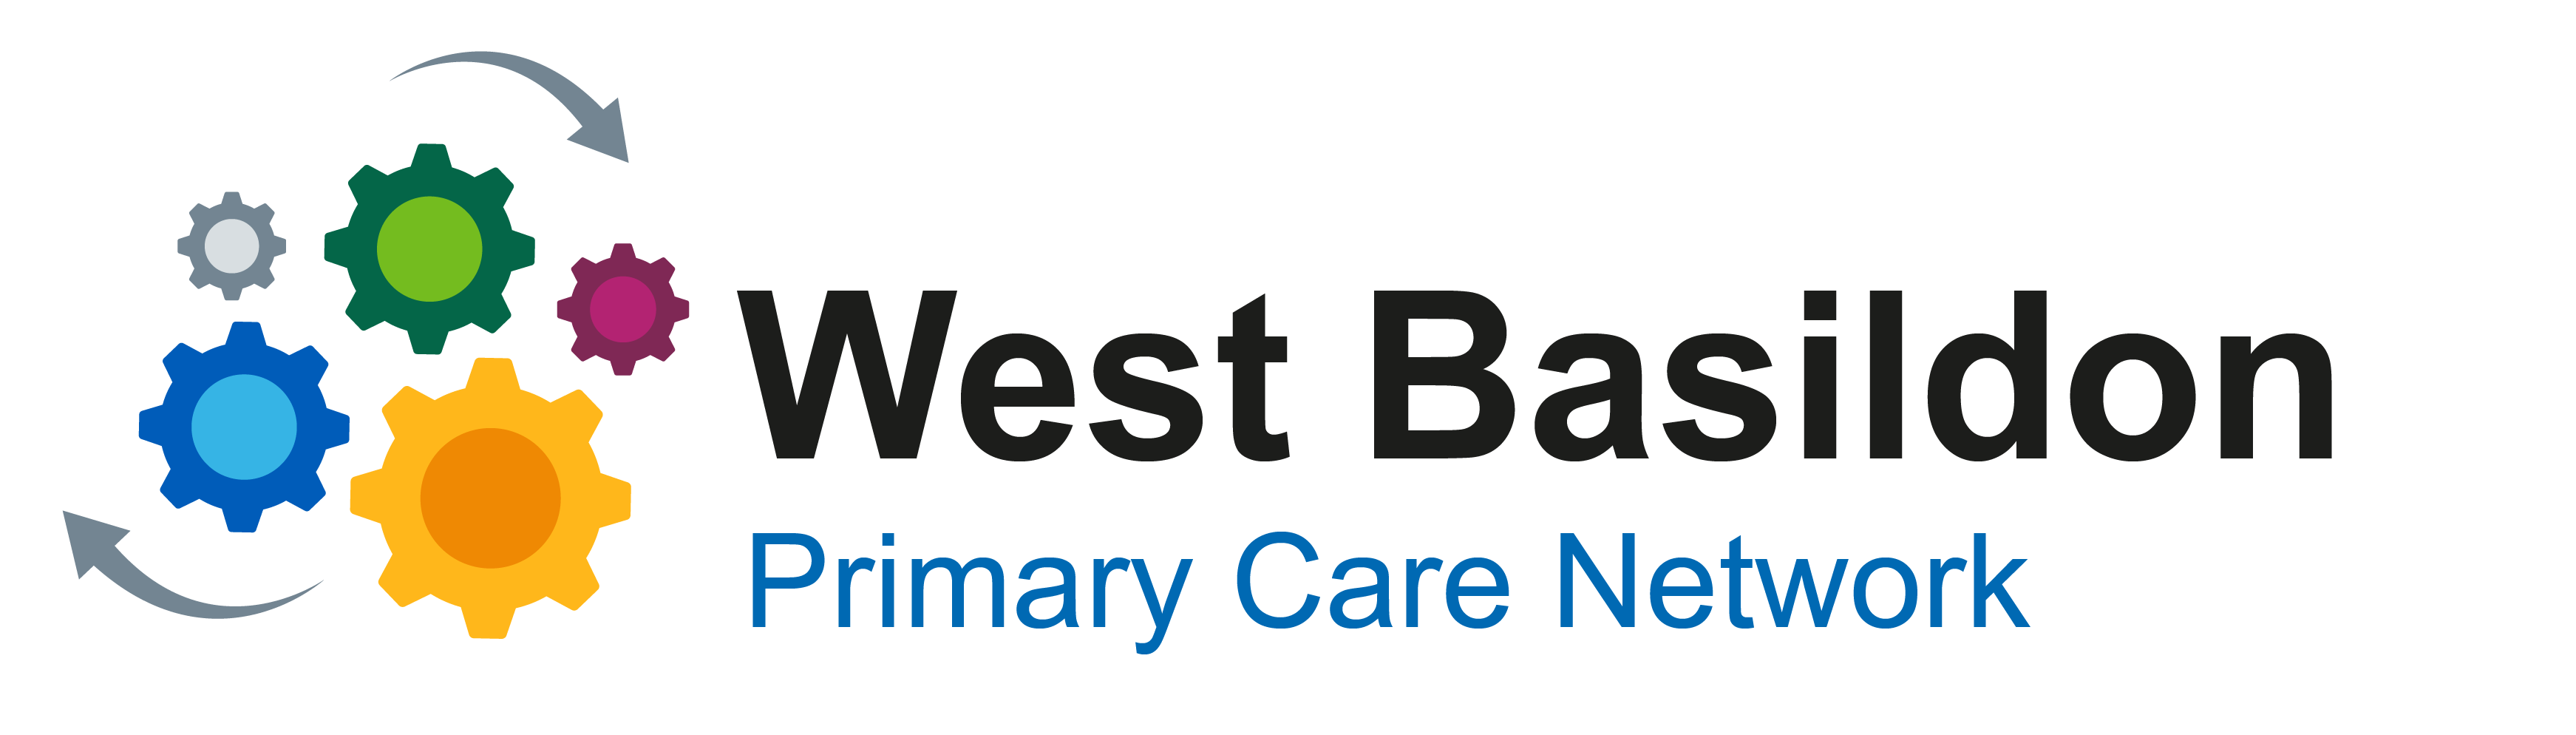 West Basildon Primary Care Network logo